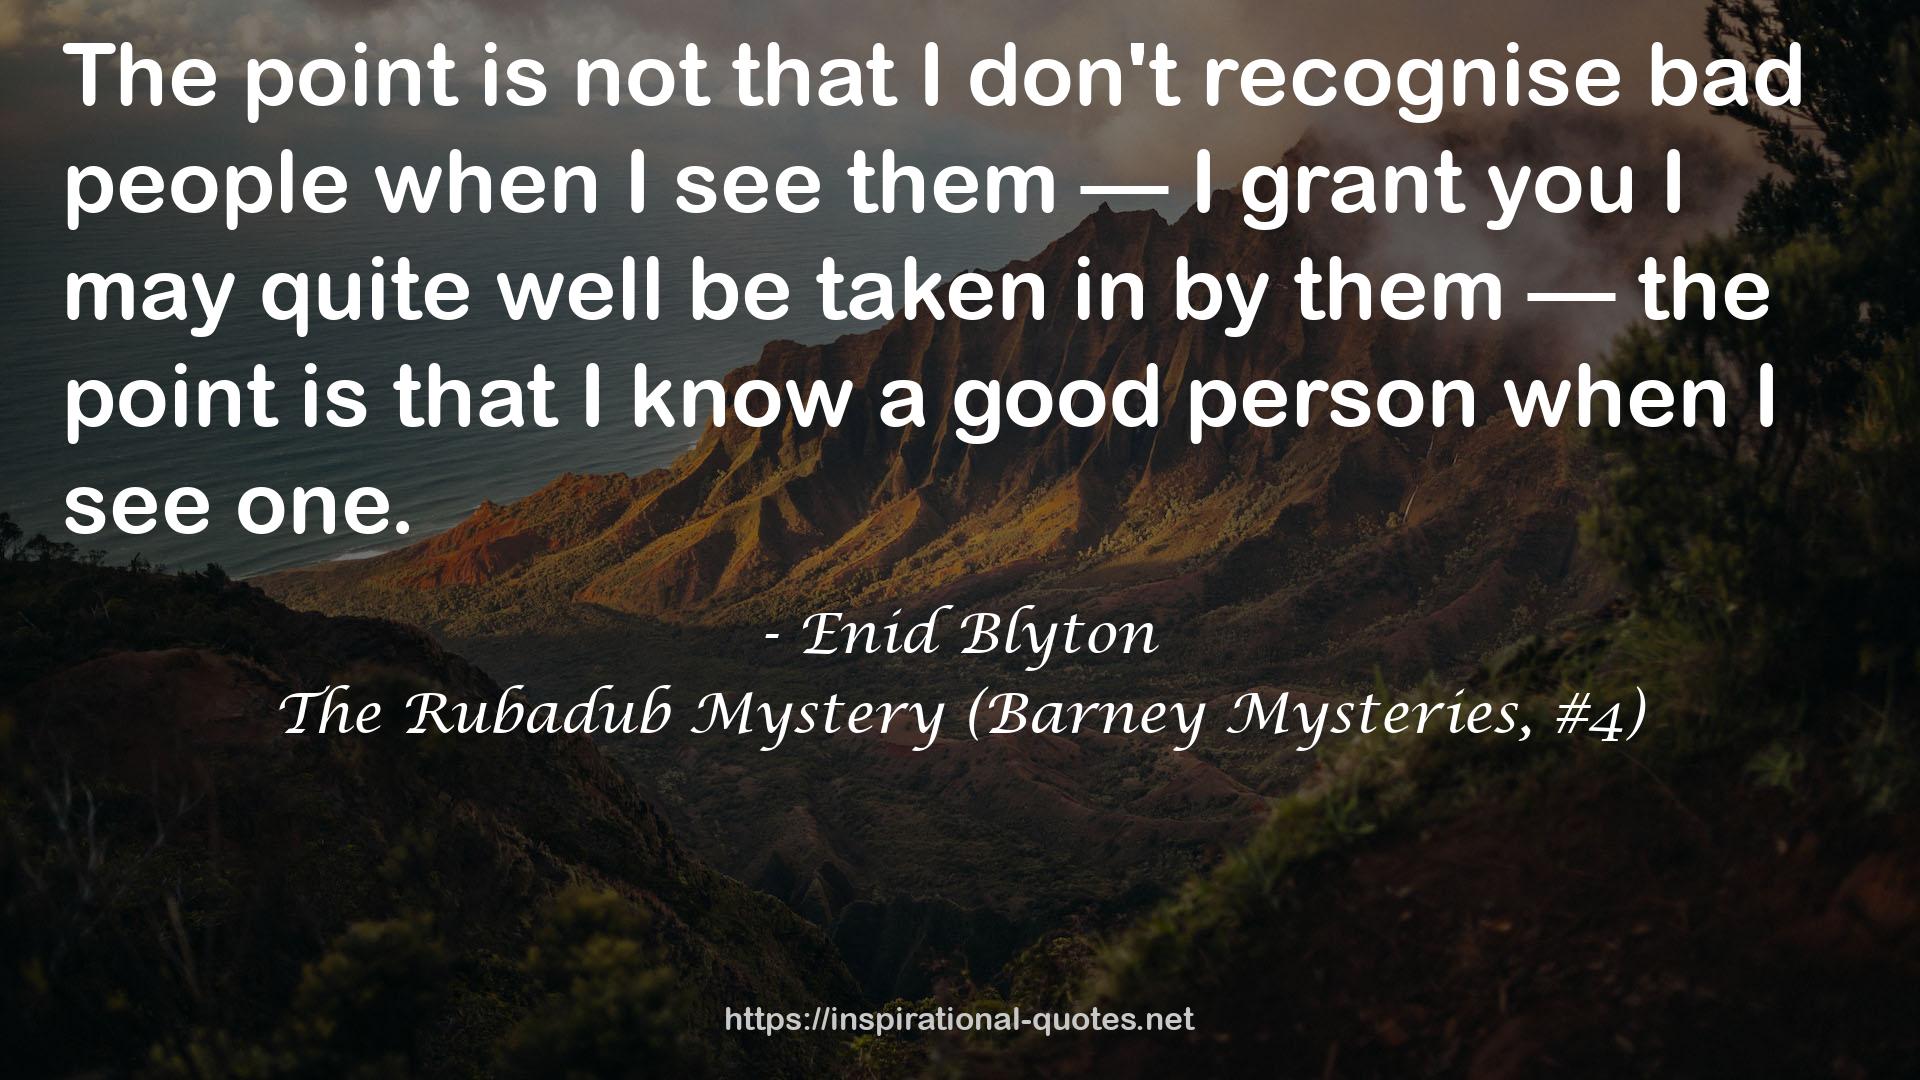 The Rubadub Mystery (Barney Mysteries, #4) QUOTES